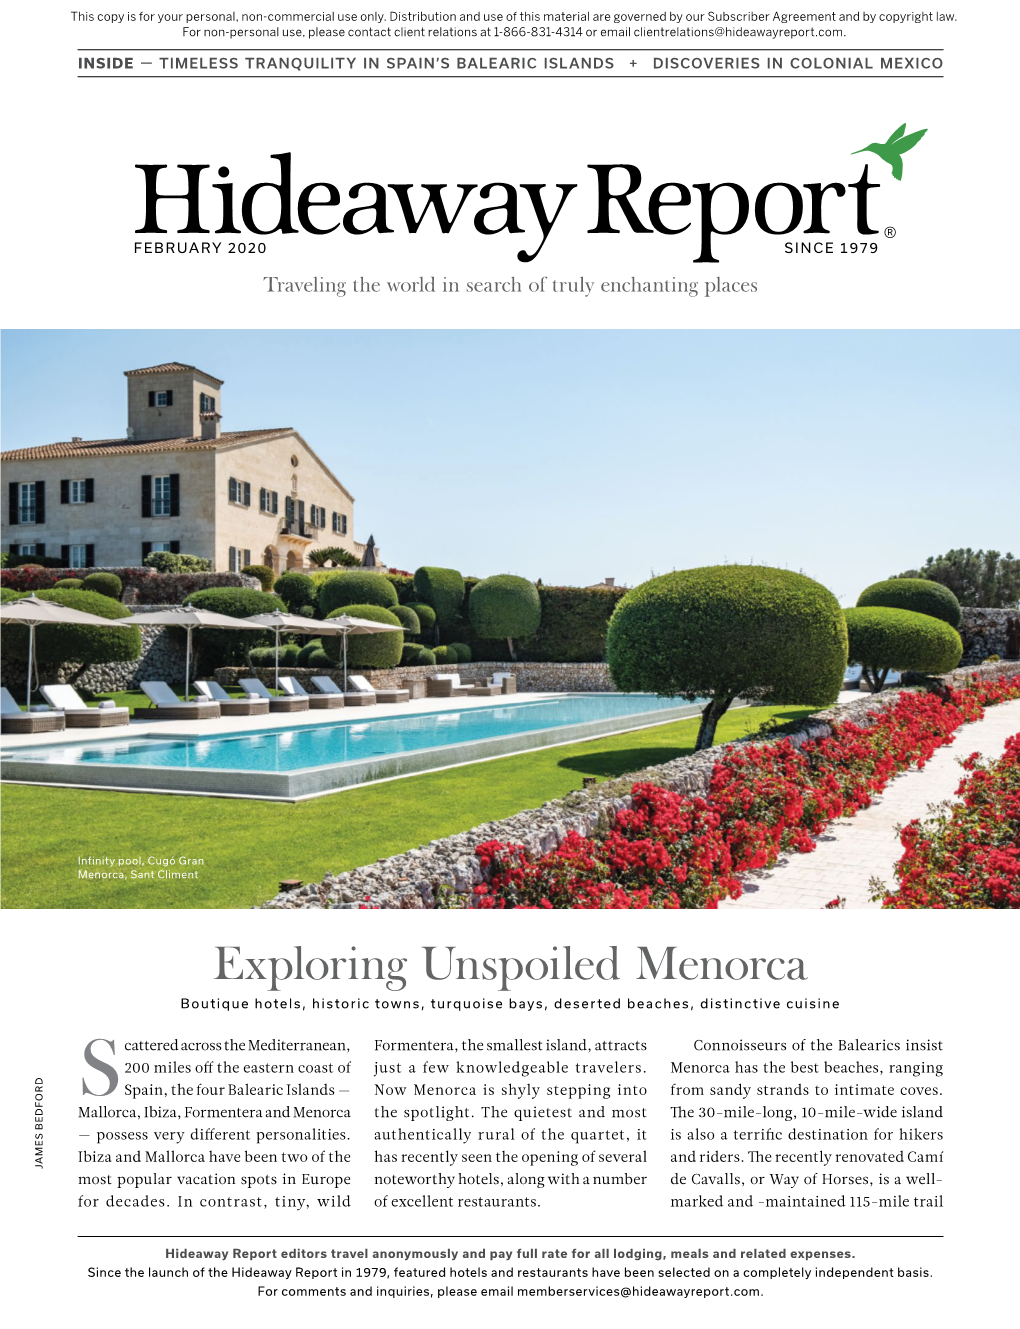 Exploring Unspoiled Menorca Boutique Hotels, Historic Towns, Turquoise Bays, Deserted Beaches, Distinctive Cuisine